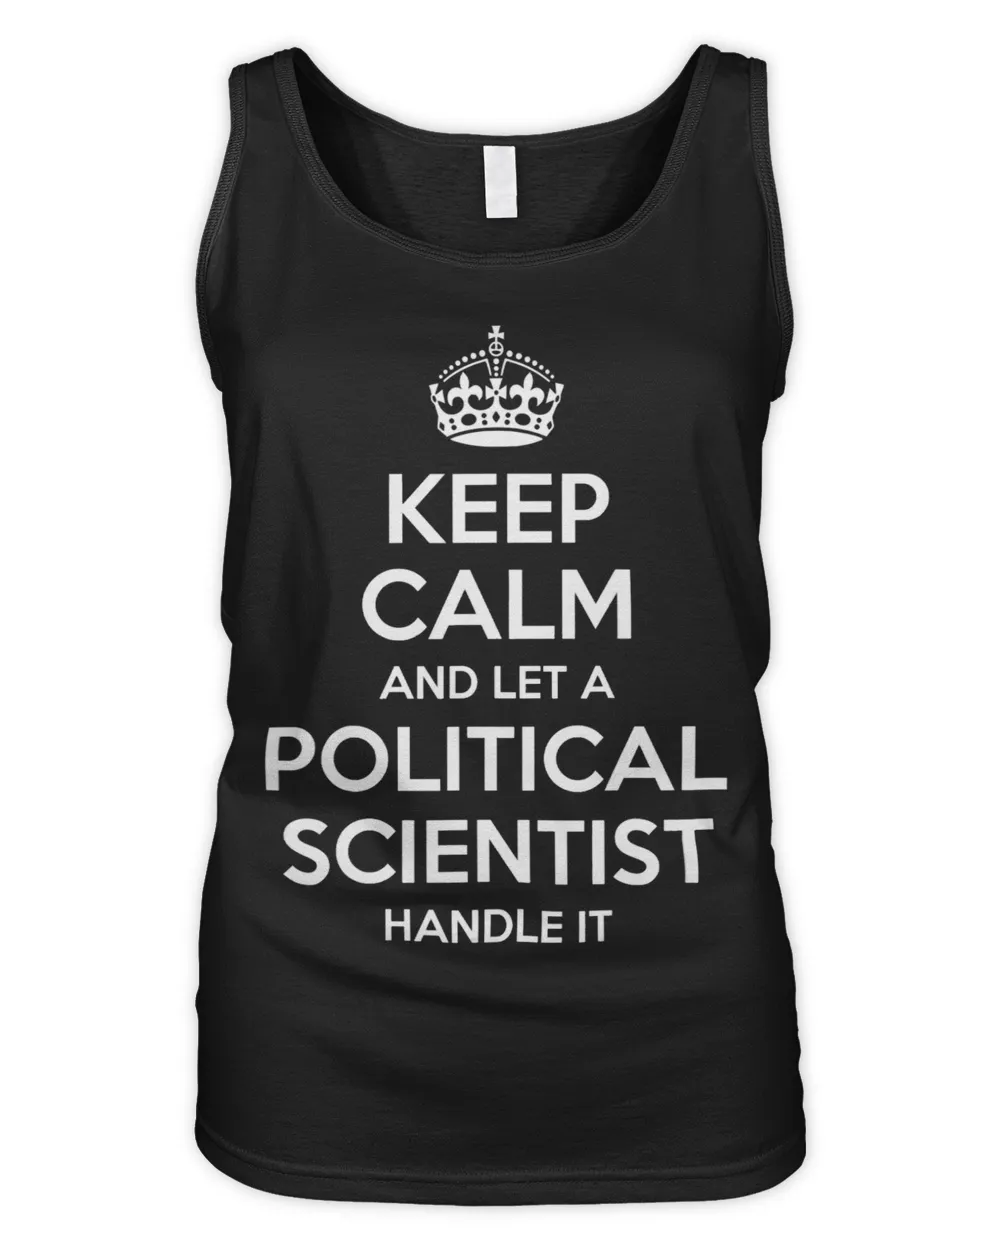 POLITICAL SCIENTIST Gift Funny Job Title Profession Birthday